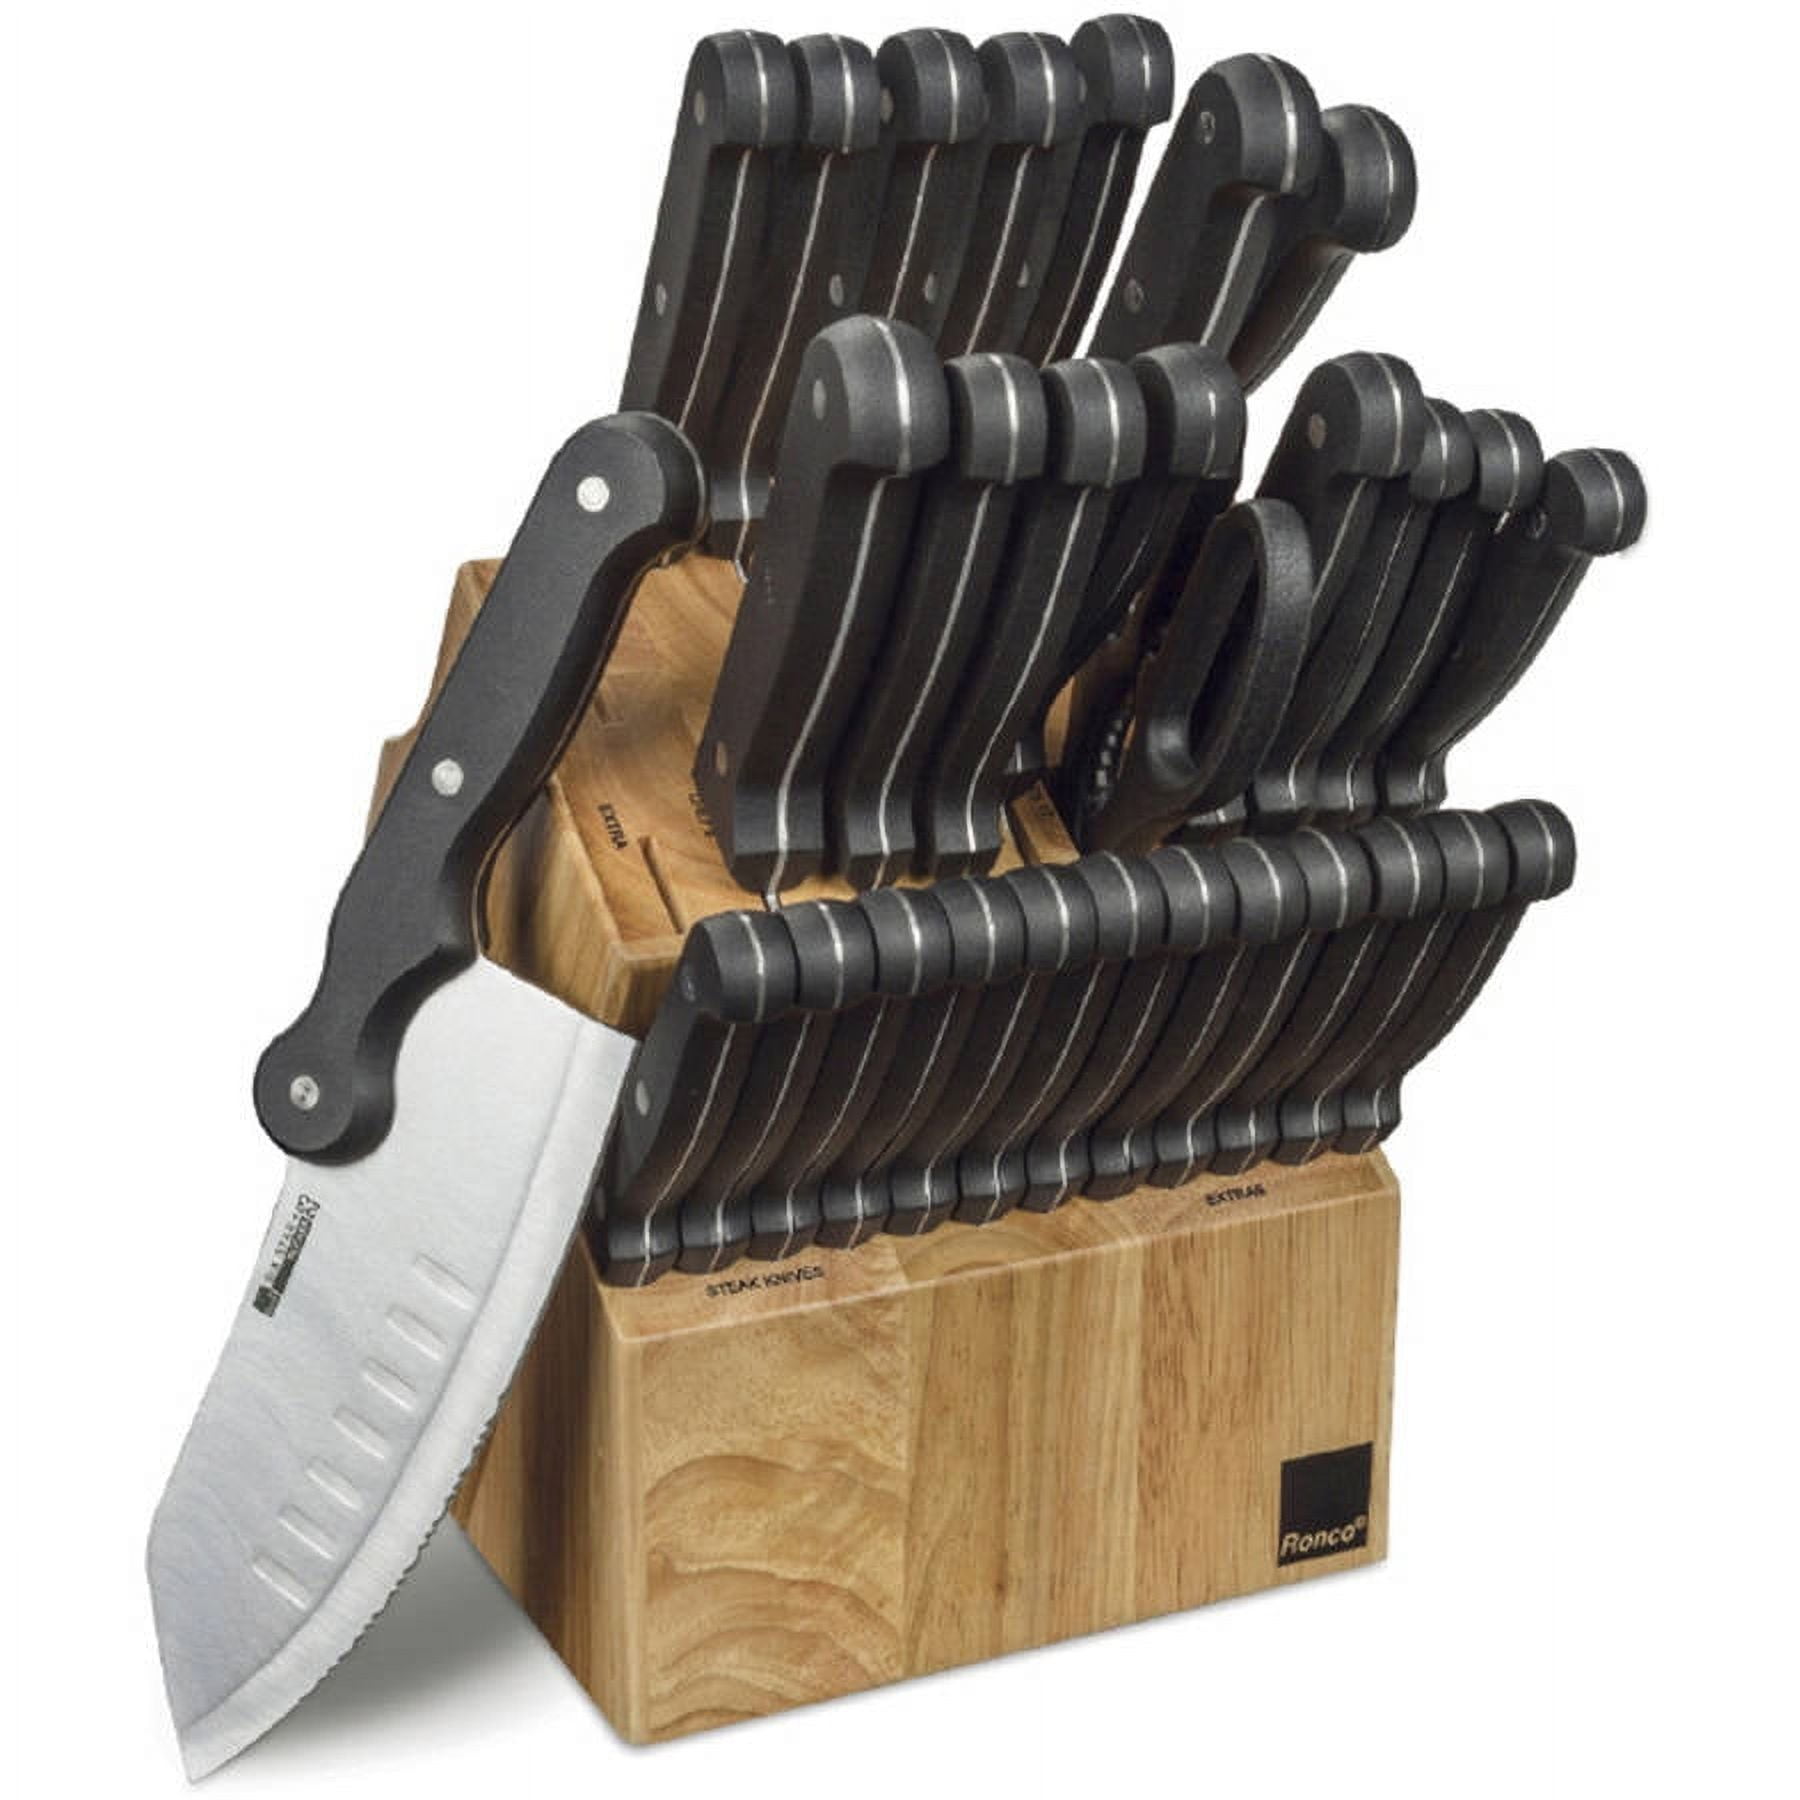 Ronco Six Star 15 Piece Knife Set 1-12, 16, 2 Steak Knives